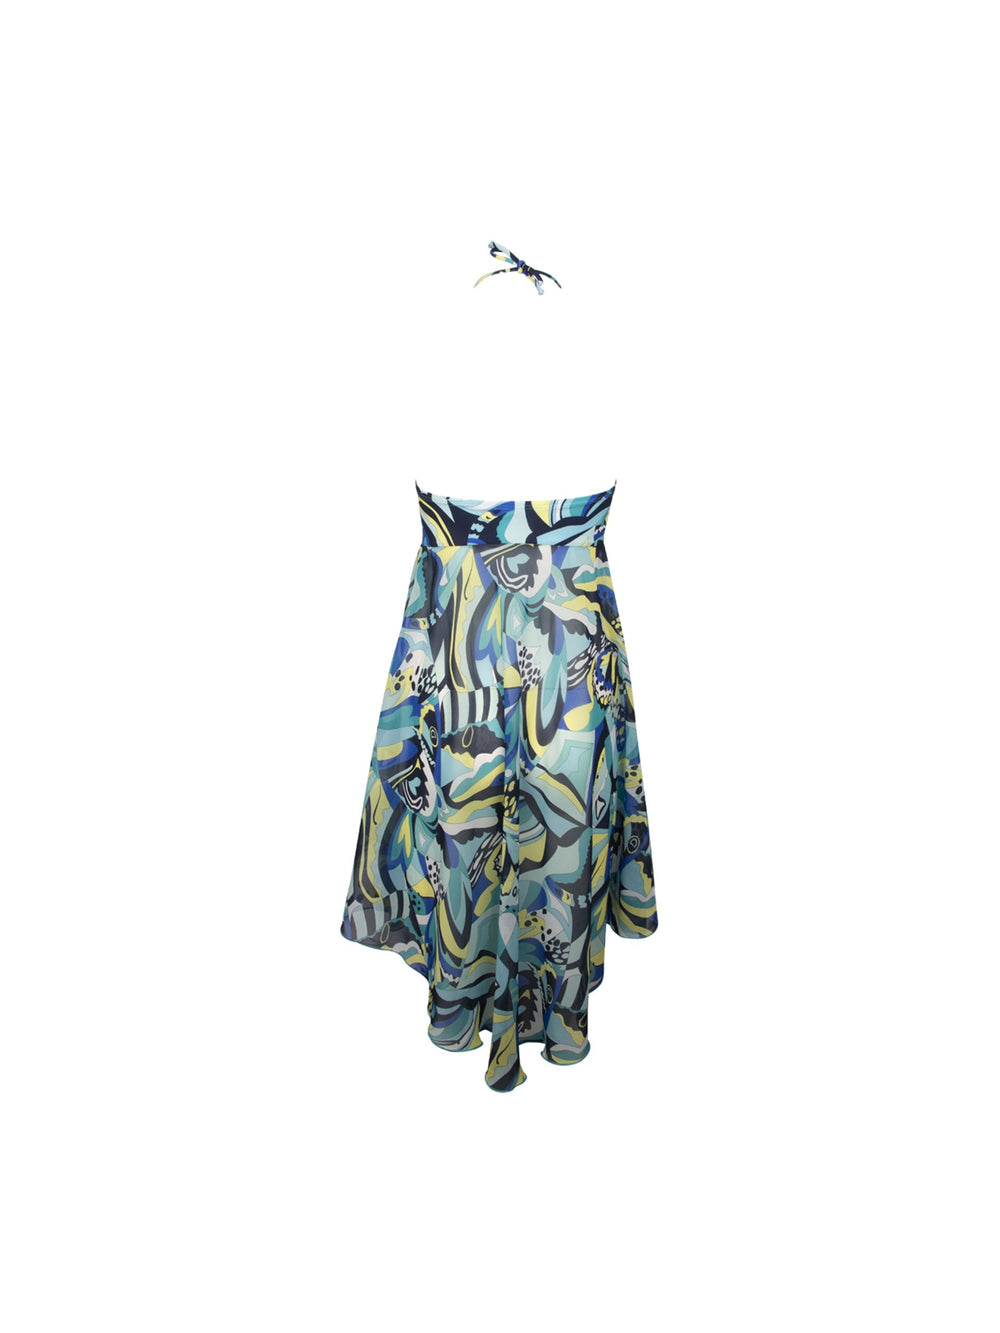 Antigel by Lise Charmel - La Muse Du Vent Bandeau corto vestido de playa Vent Du Large Beach Dress Antigel by Lise Charmel Trajes de baño